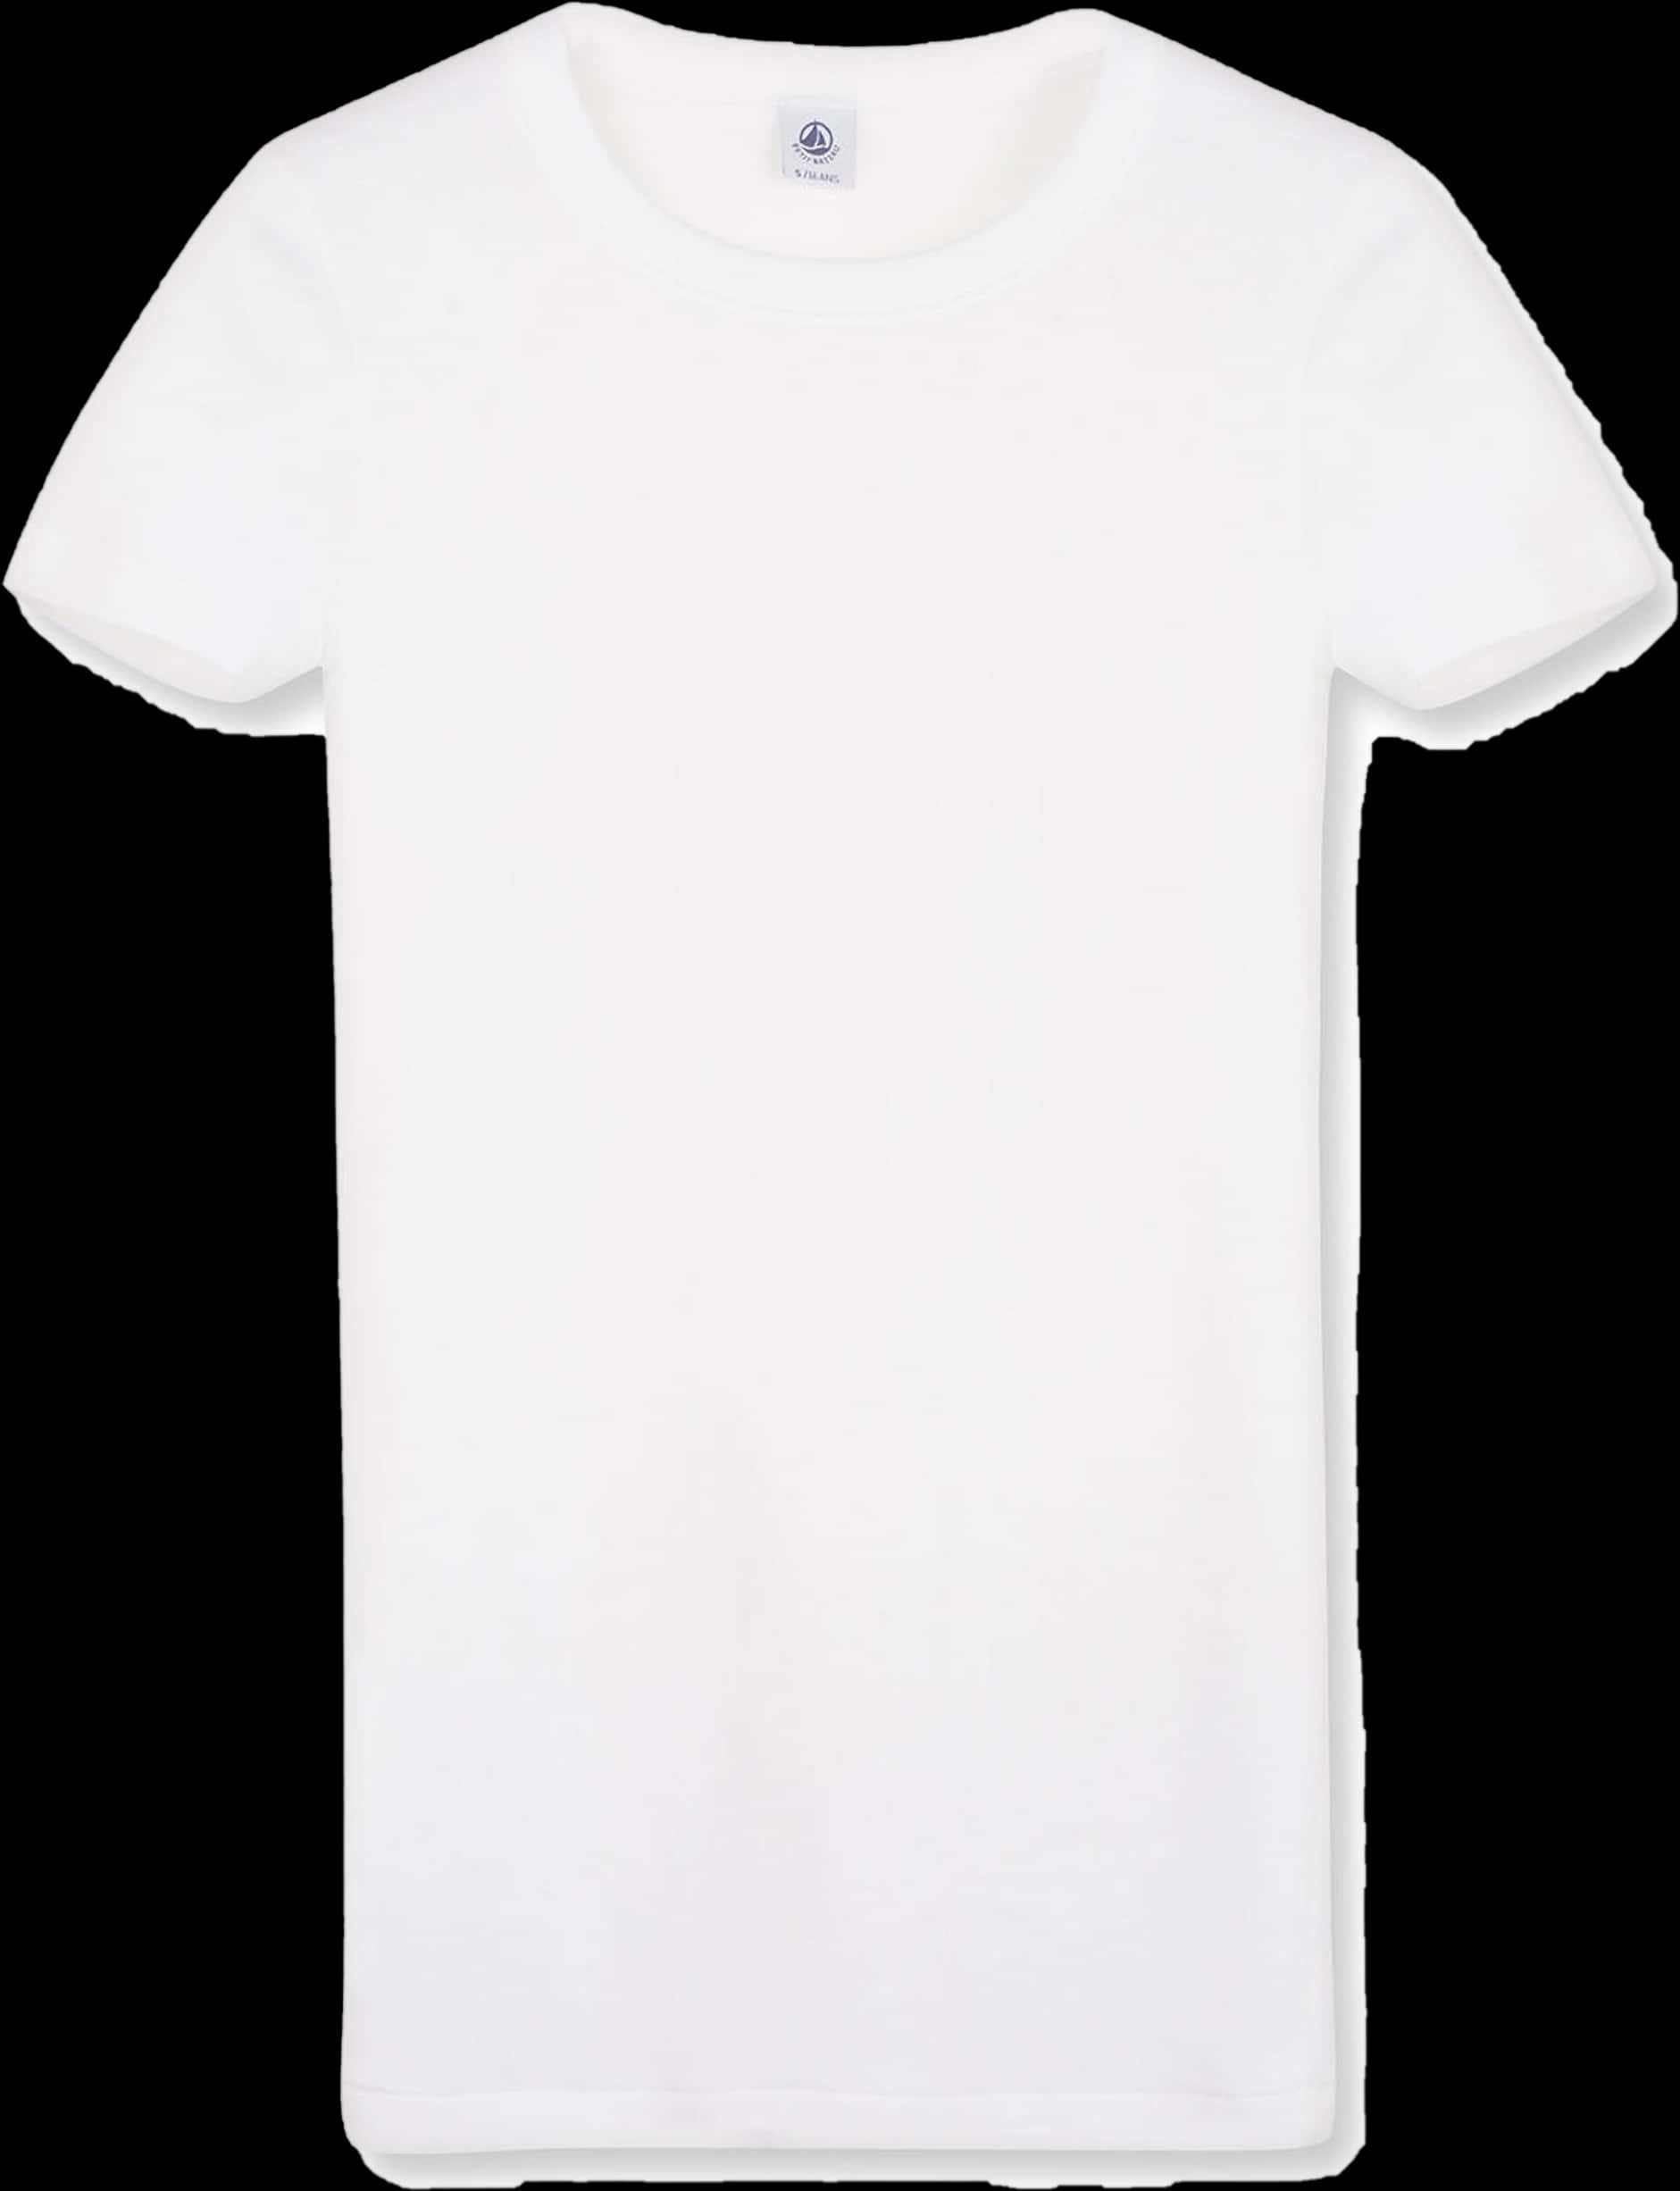 A White Shirt On A Swinger